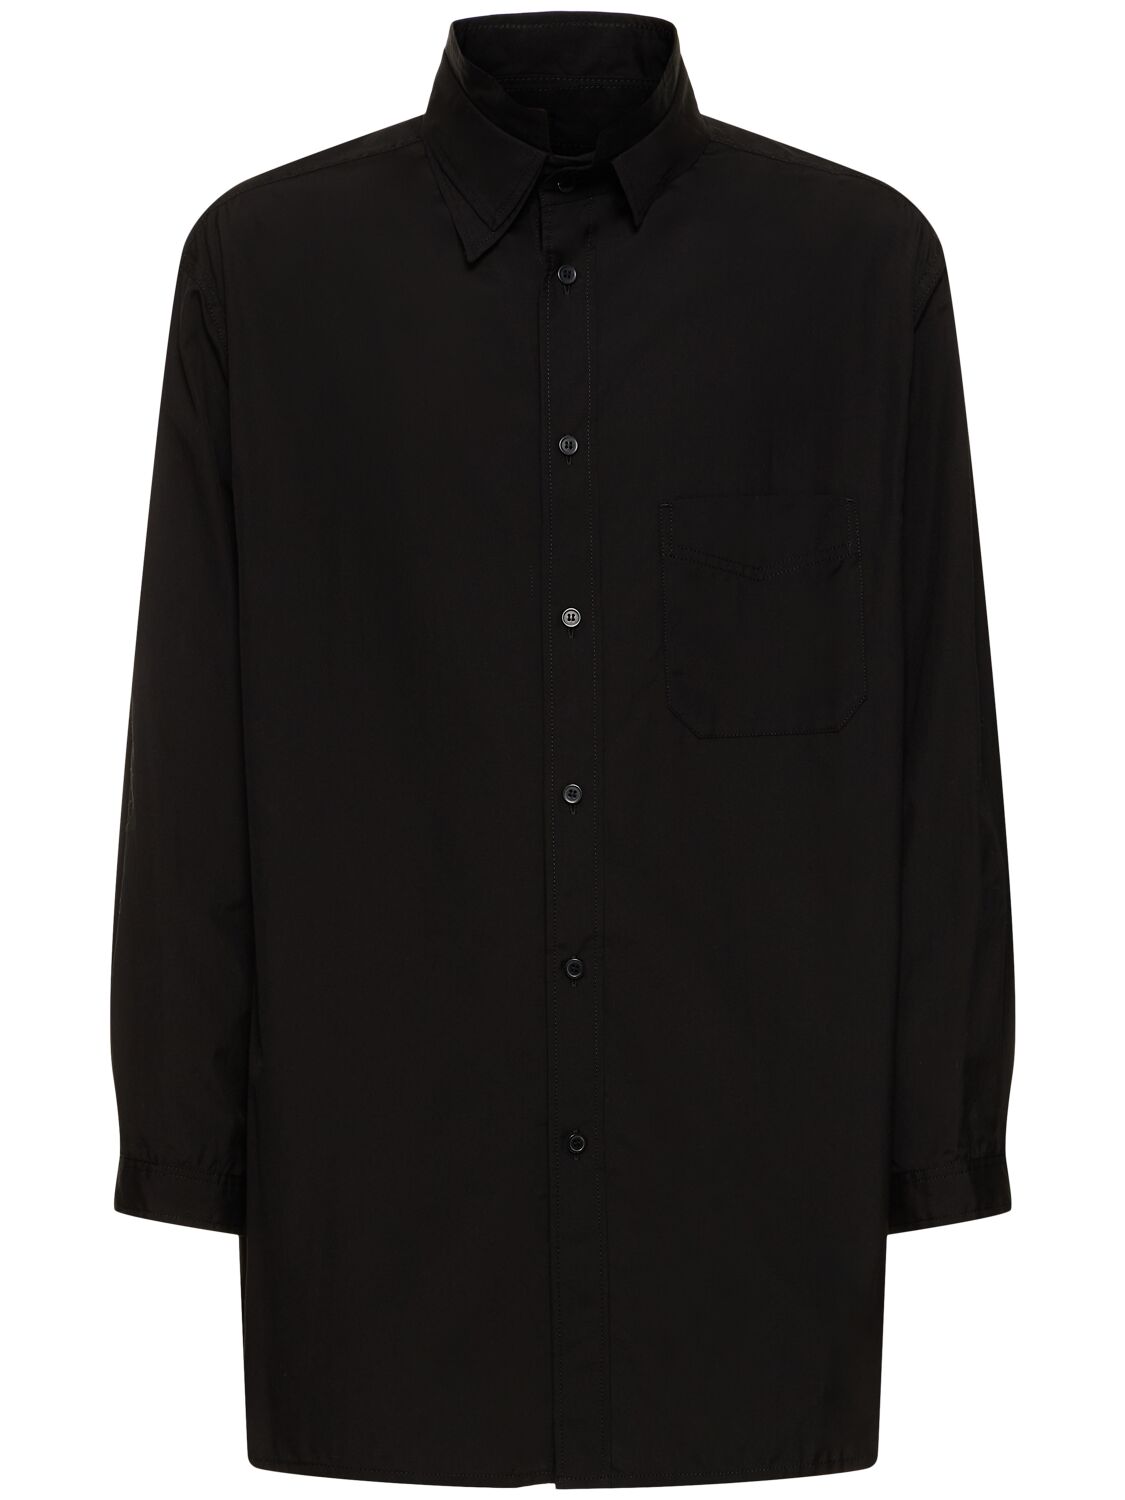 Yohji Yamamoto A-chain Stitch 3-layer Cotton Shirt In Black